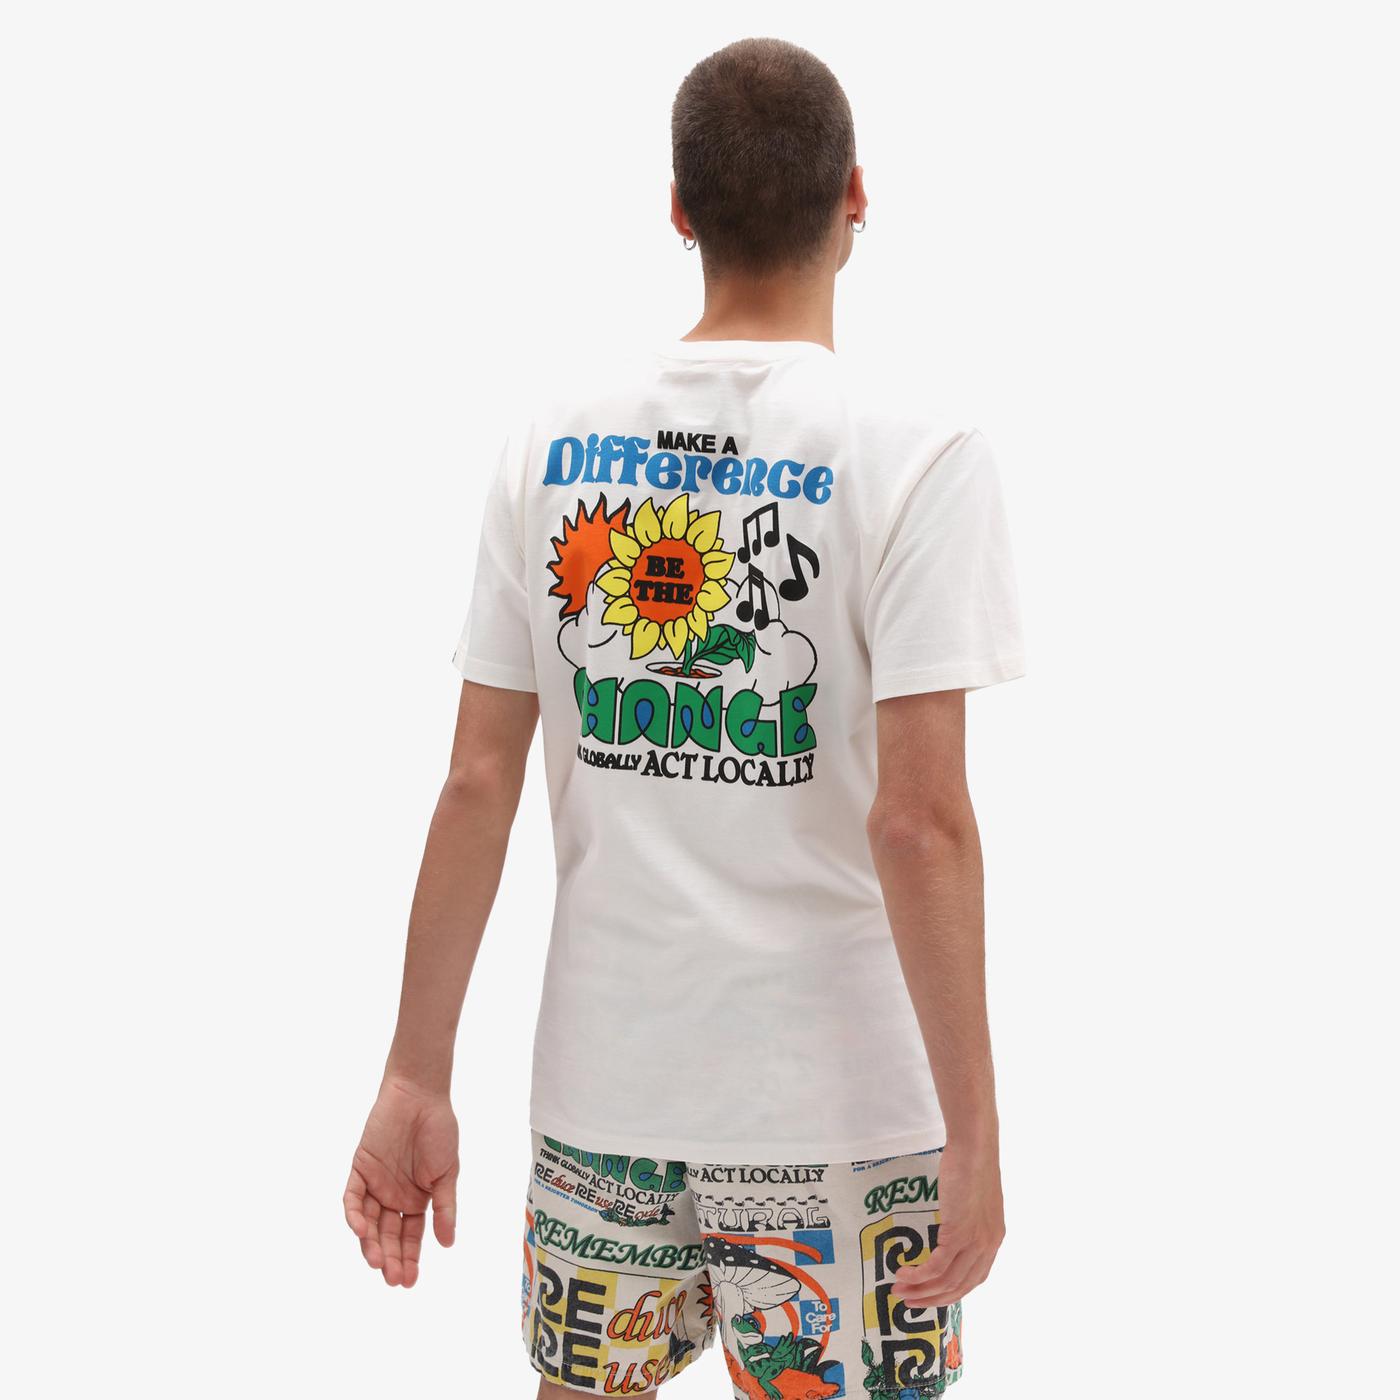 Vans Eco Positivity Erkek Krem T-Shirt